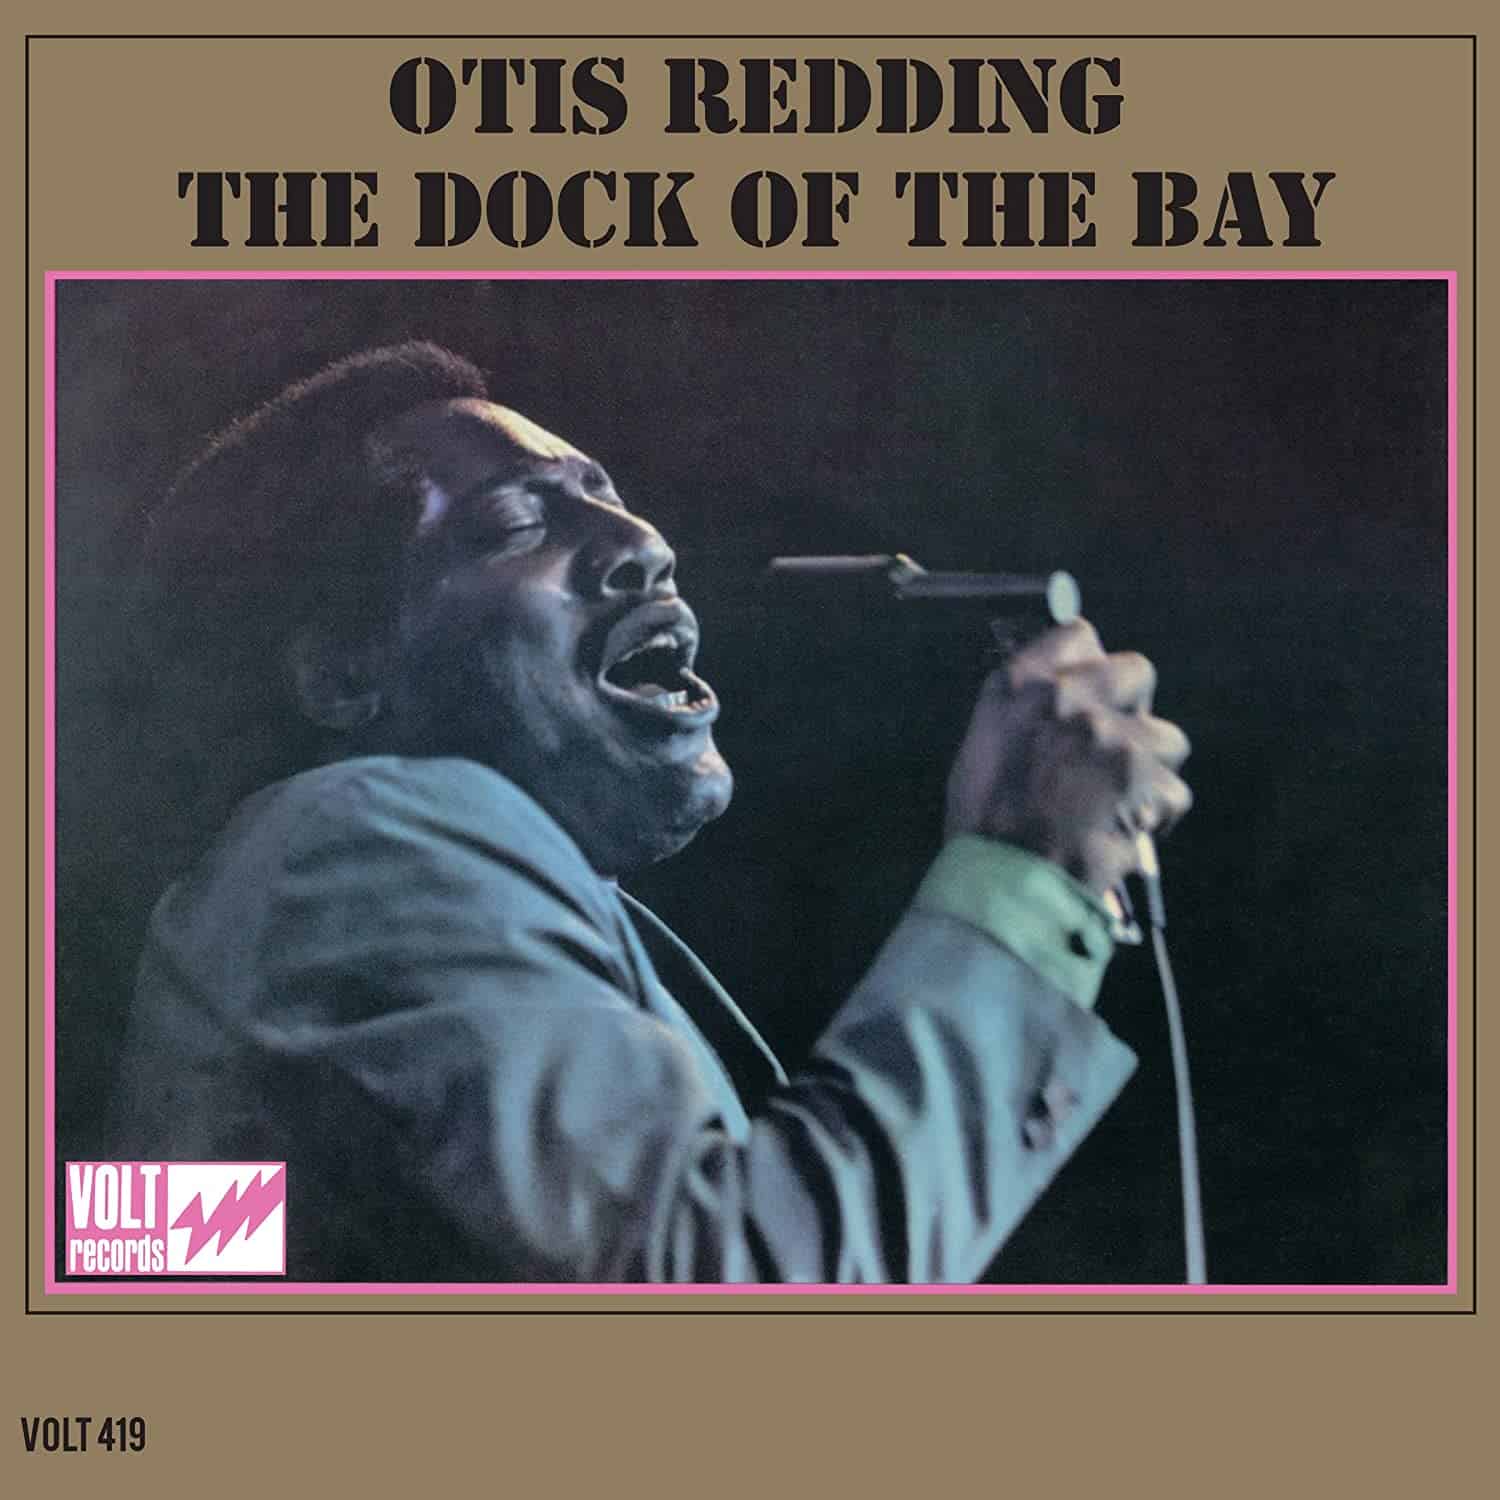 Otis-redding-dock-of-the-bay-vinyl-record-album-LP-front